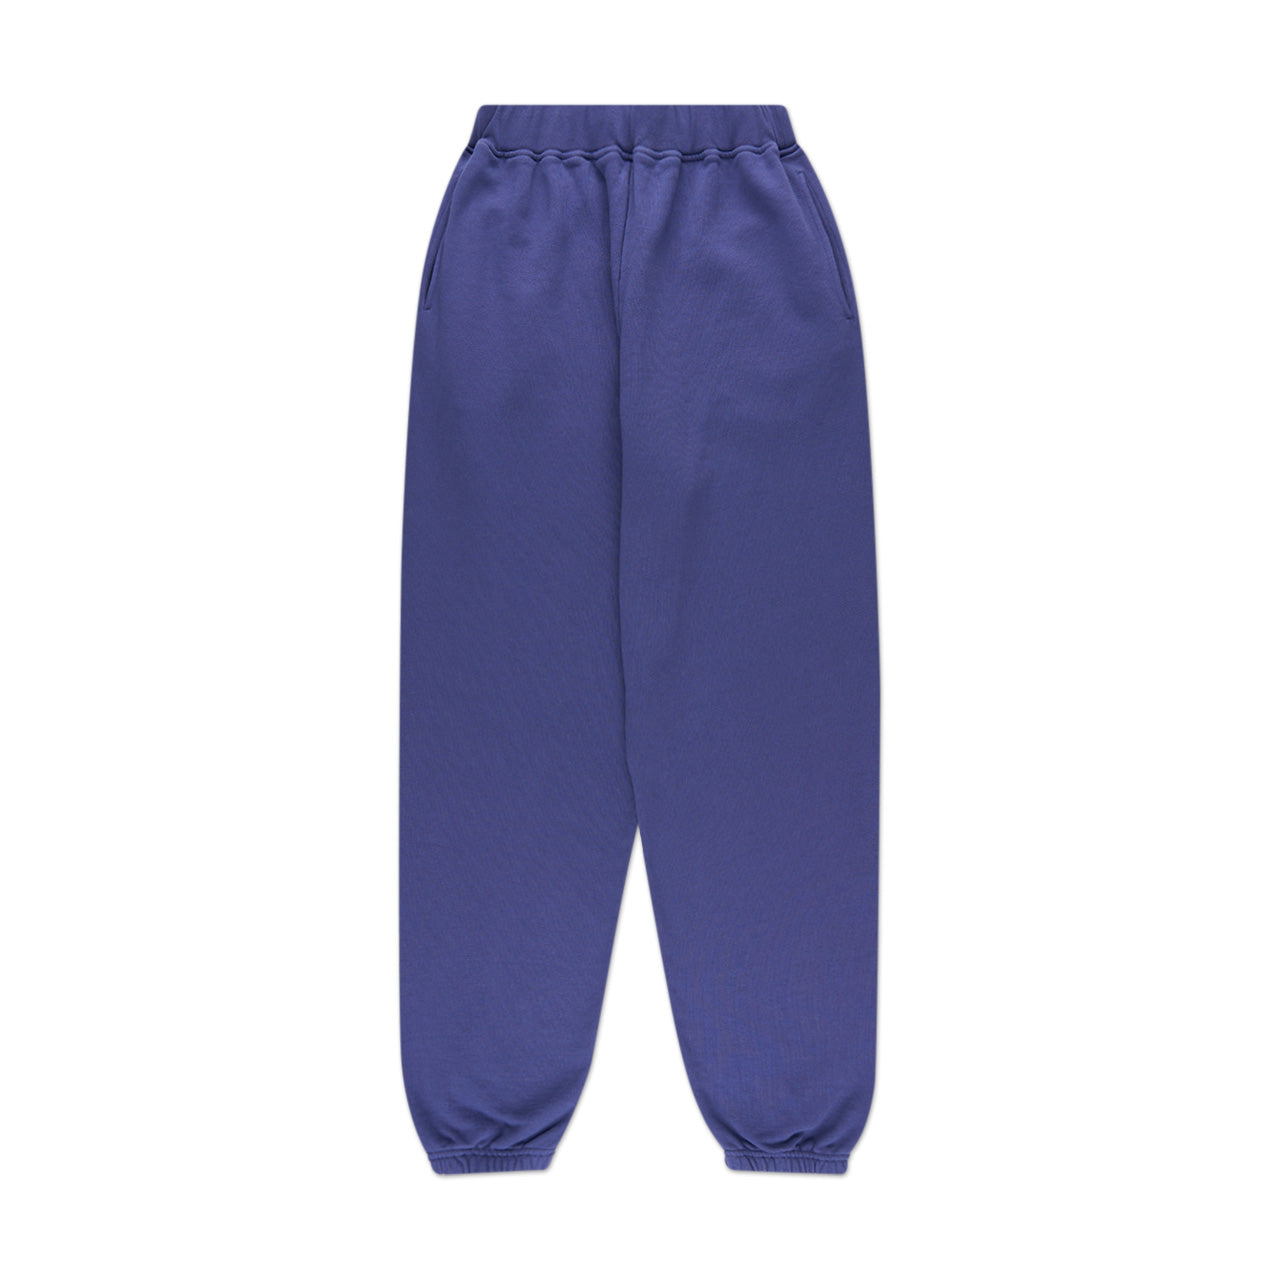 ARIES, Sky blue Men's Casual Pants